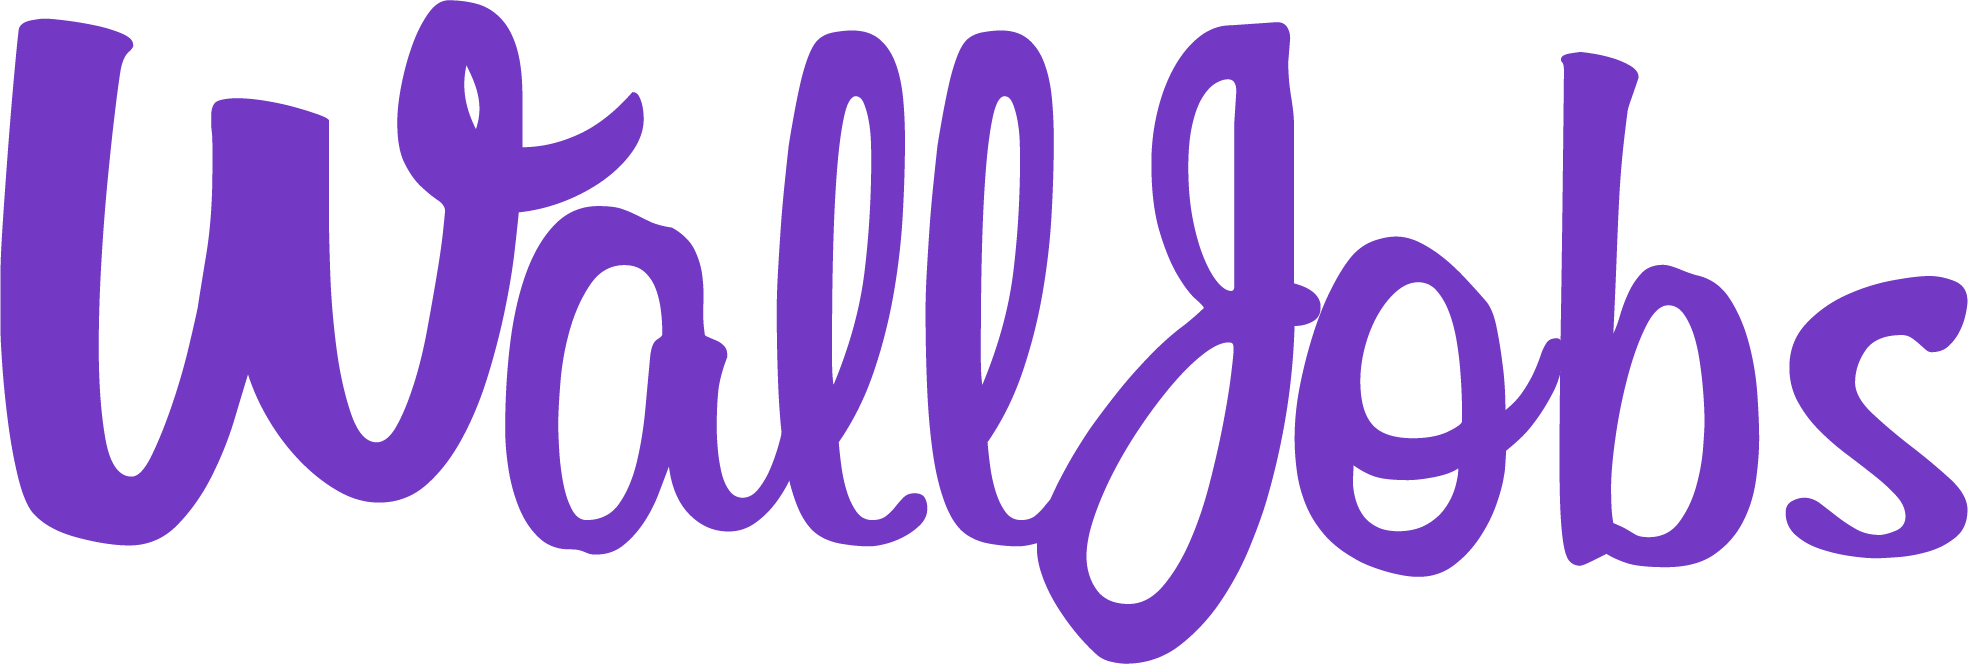 logo walljobs purple